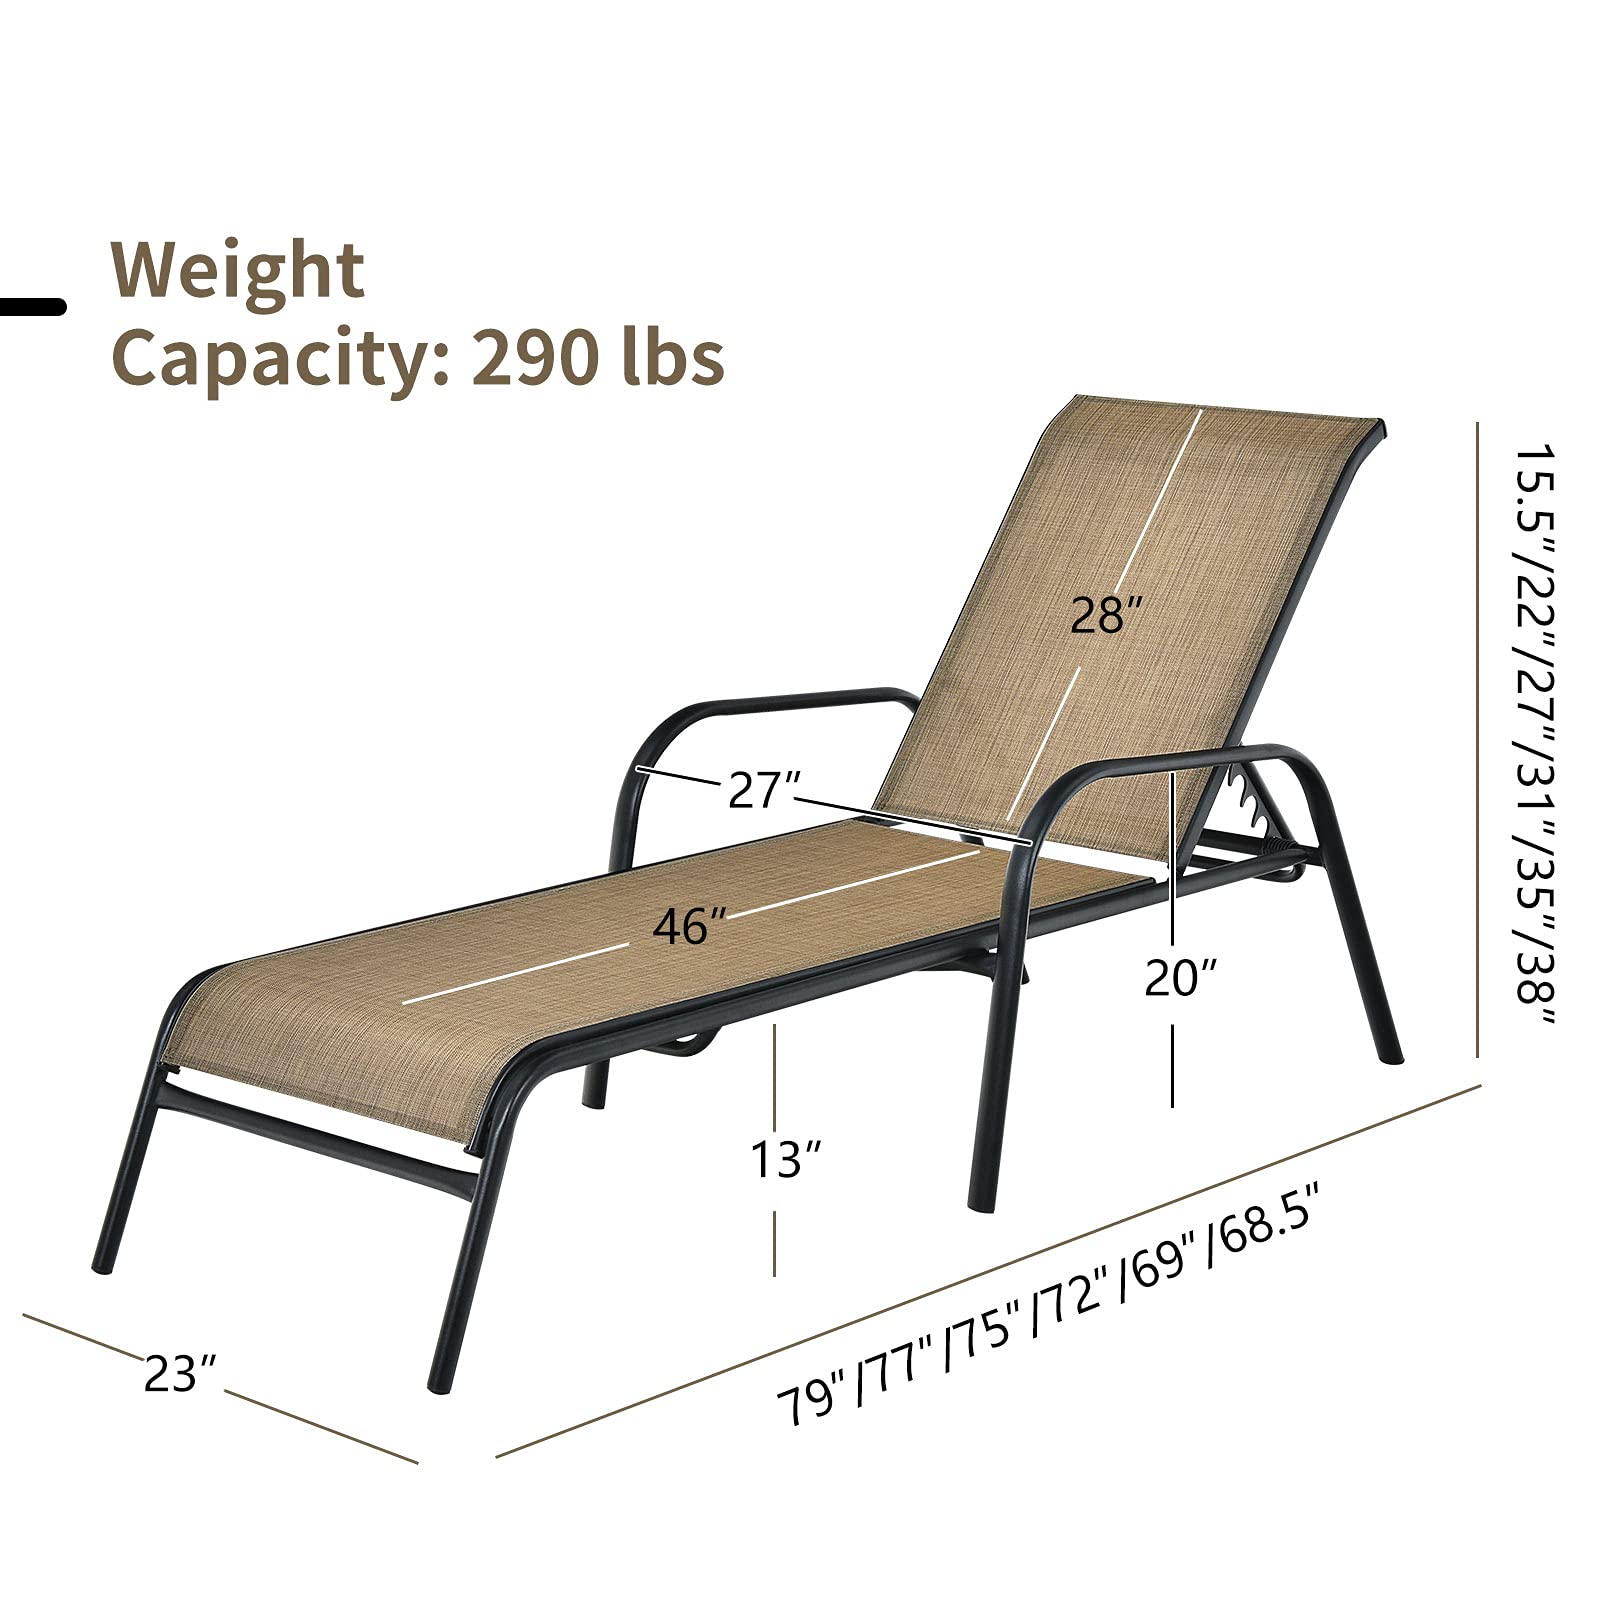 Giantex  Stackable Chaise Lounge Chair for Sunbathing, Poolside, Backyard, Garden Beach Lawn Chairs (Brown)